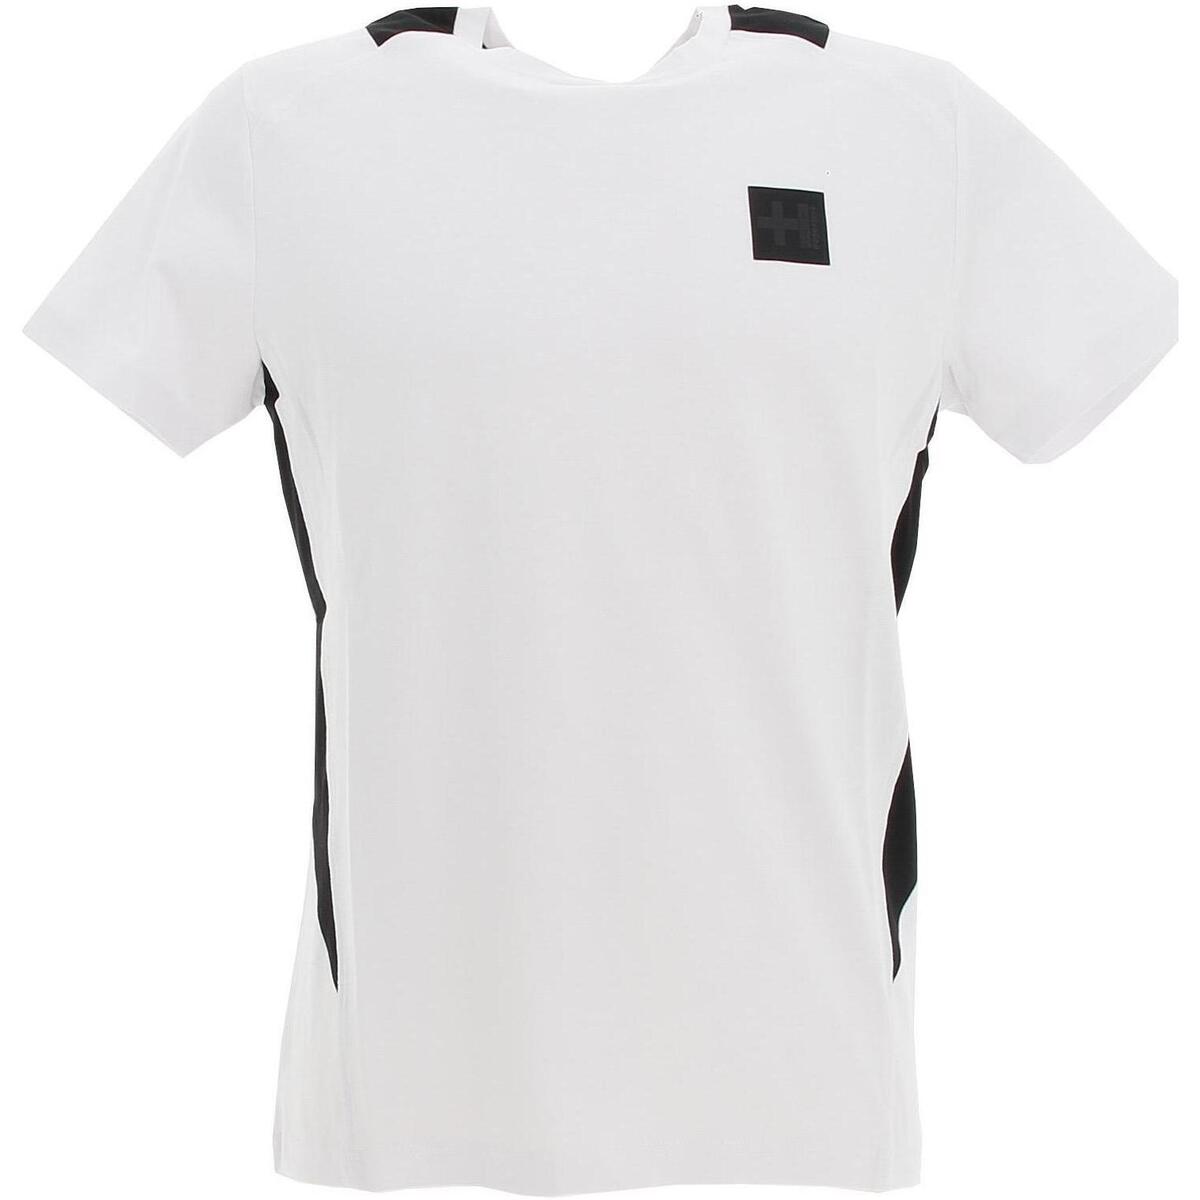 Vêtements Homme T-shirtFiretrap PU Mini Shirt Dress T-shirt Blanc